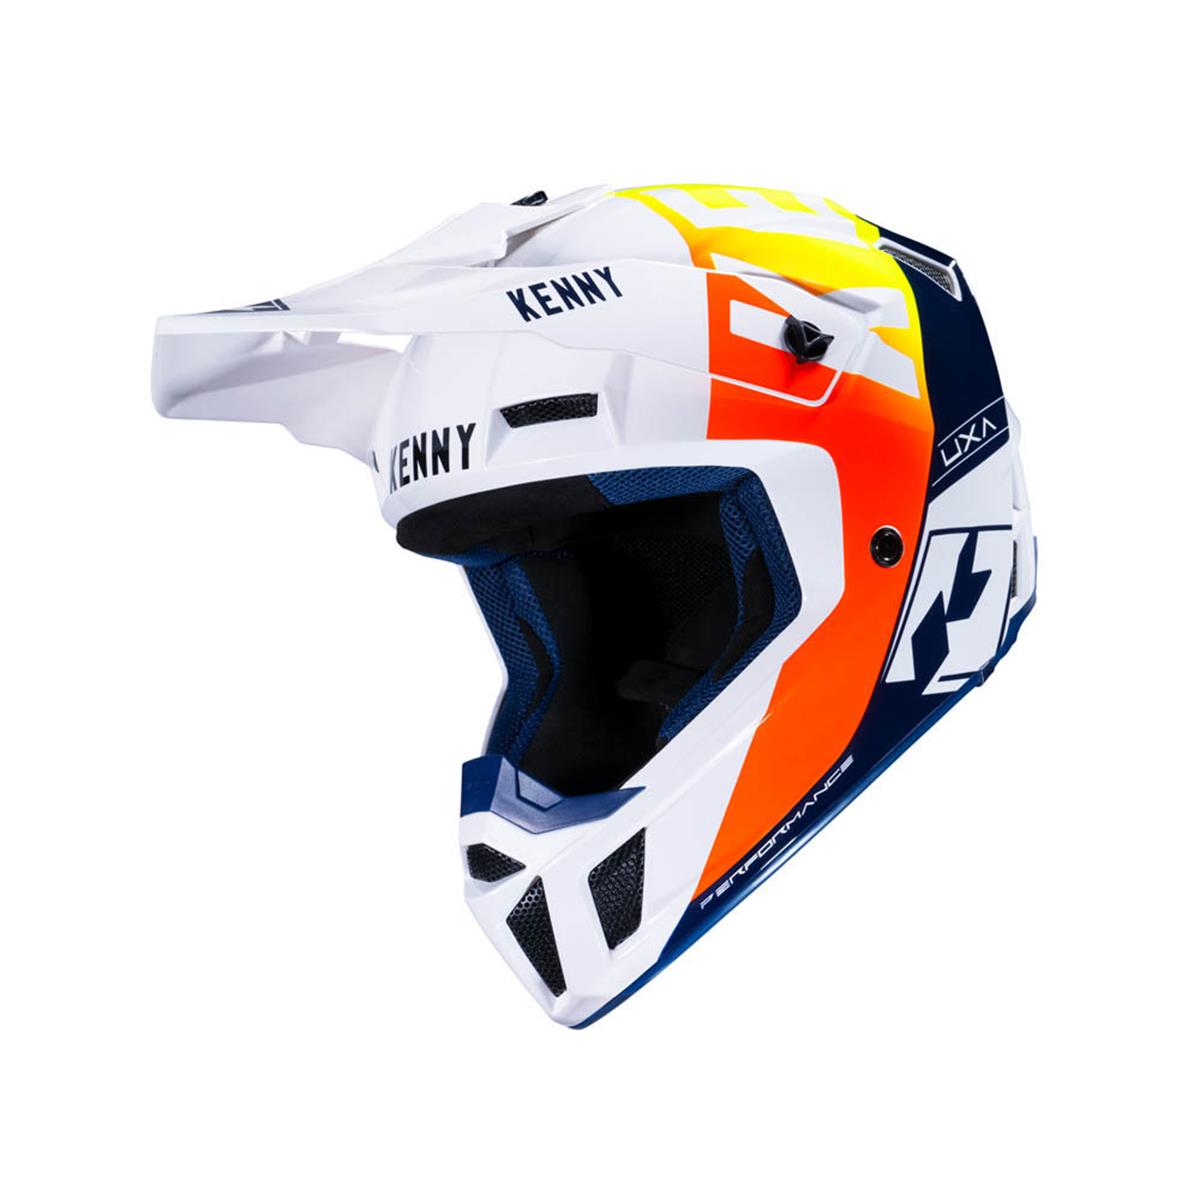 Kenny MX Helmet Performance Graphic - White/Navy/Red